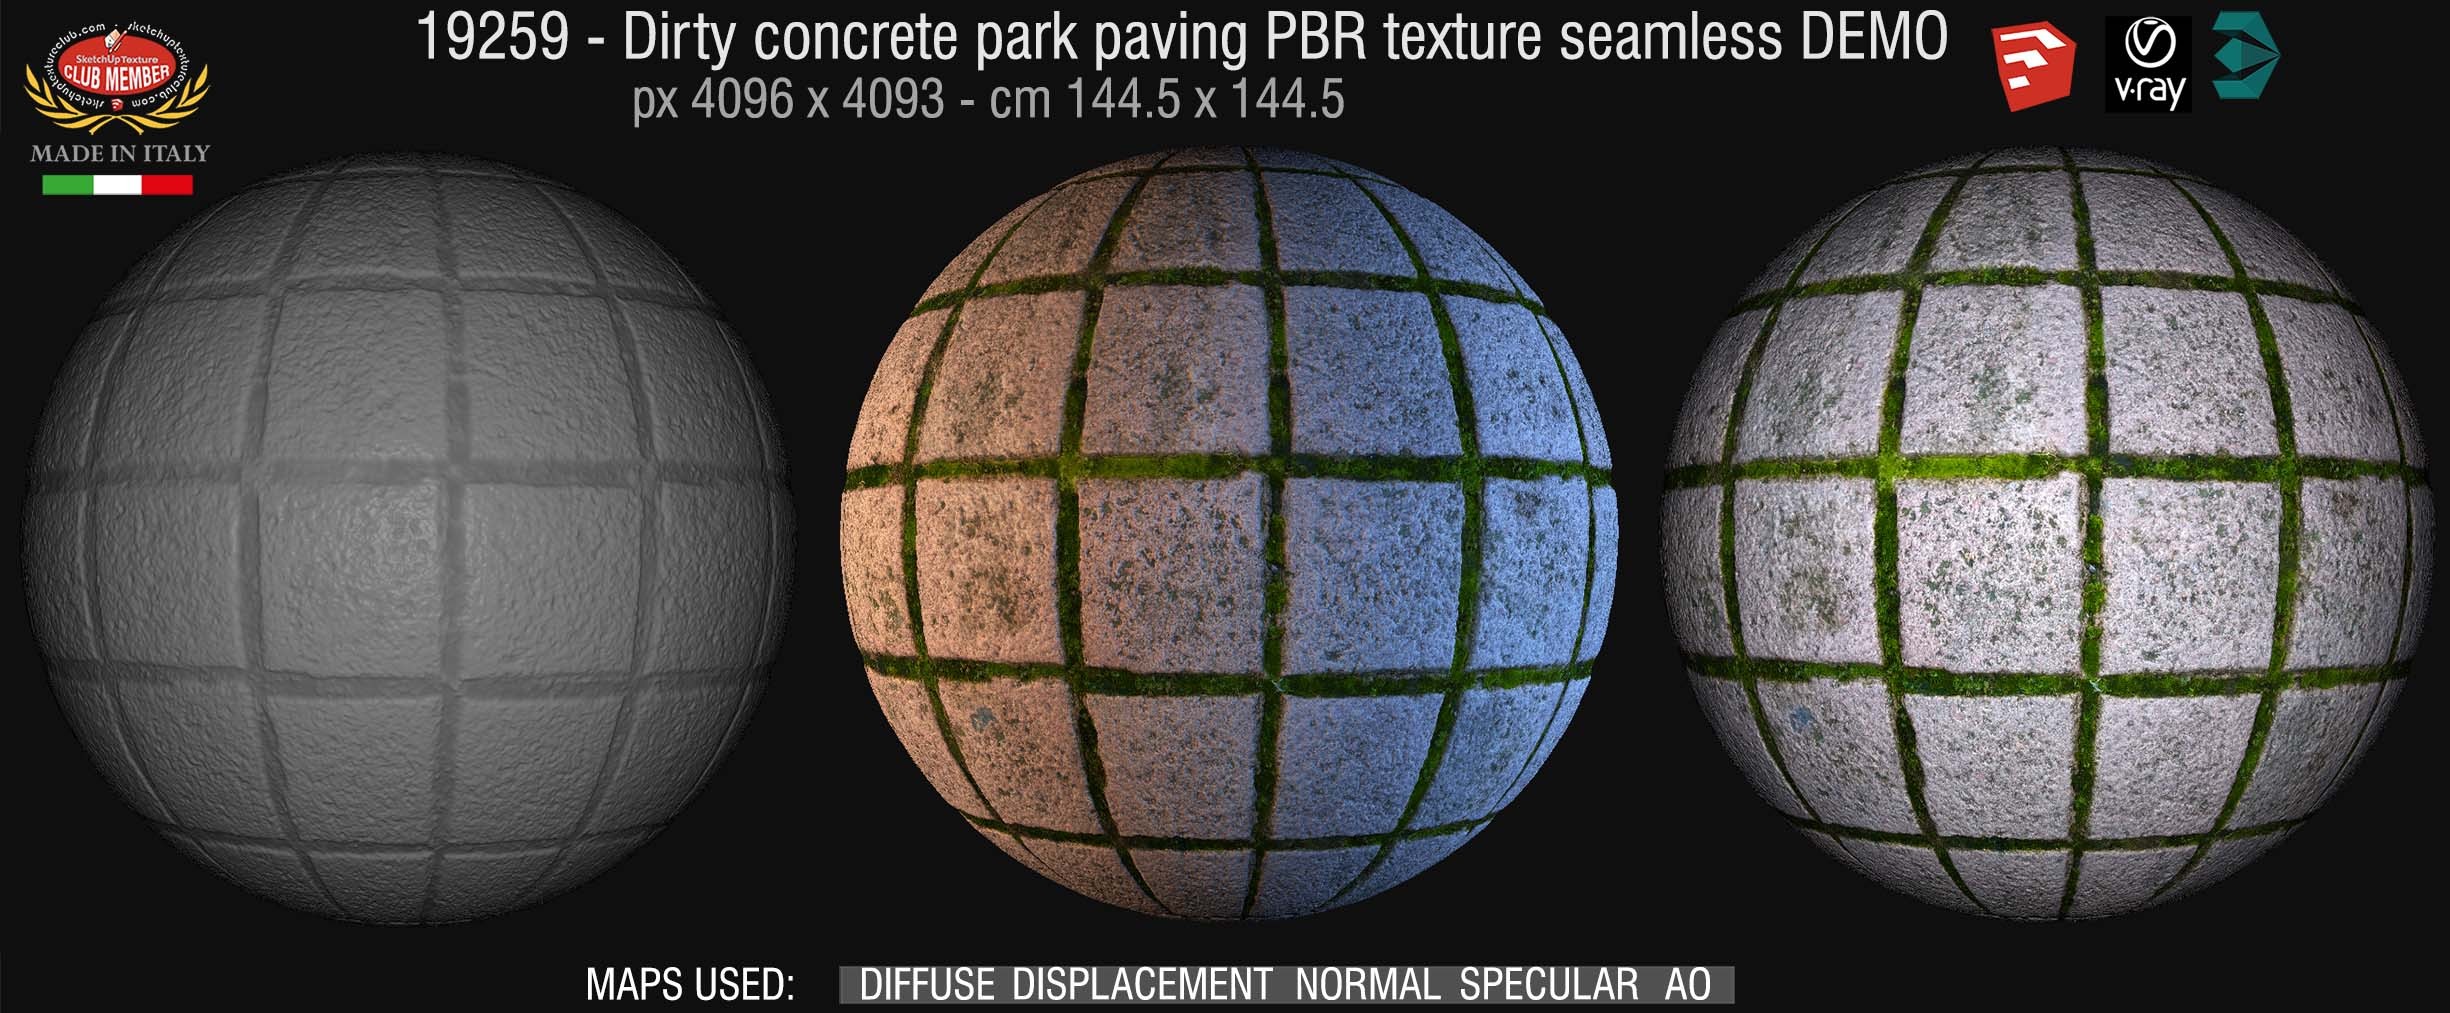 19259 dirty concrete park paving PBR texture seamless DEMO